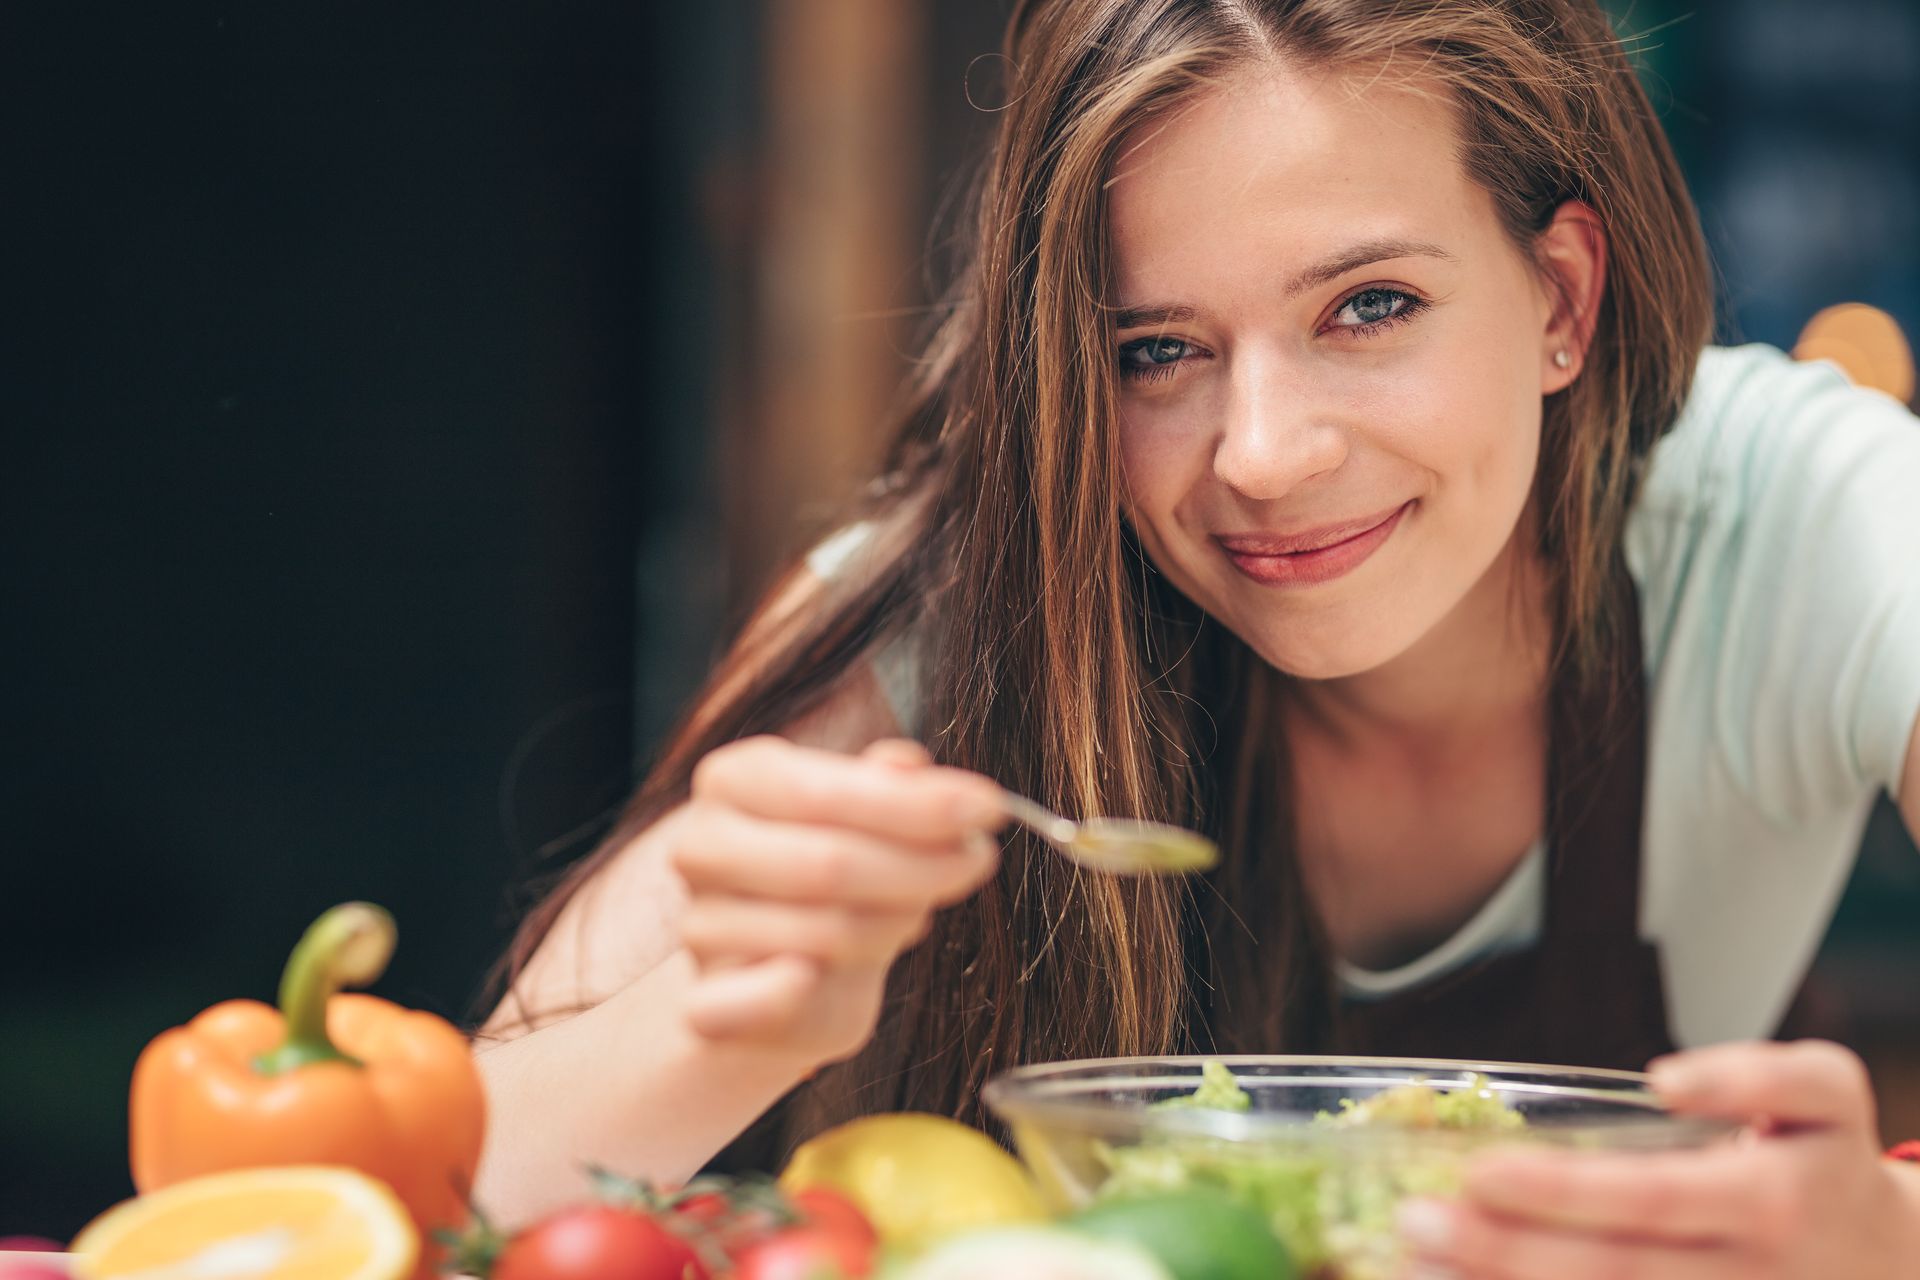 Jeune femme souriante occupée à déguster une salade